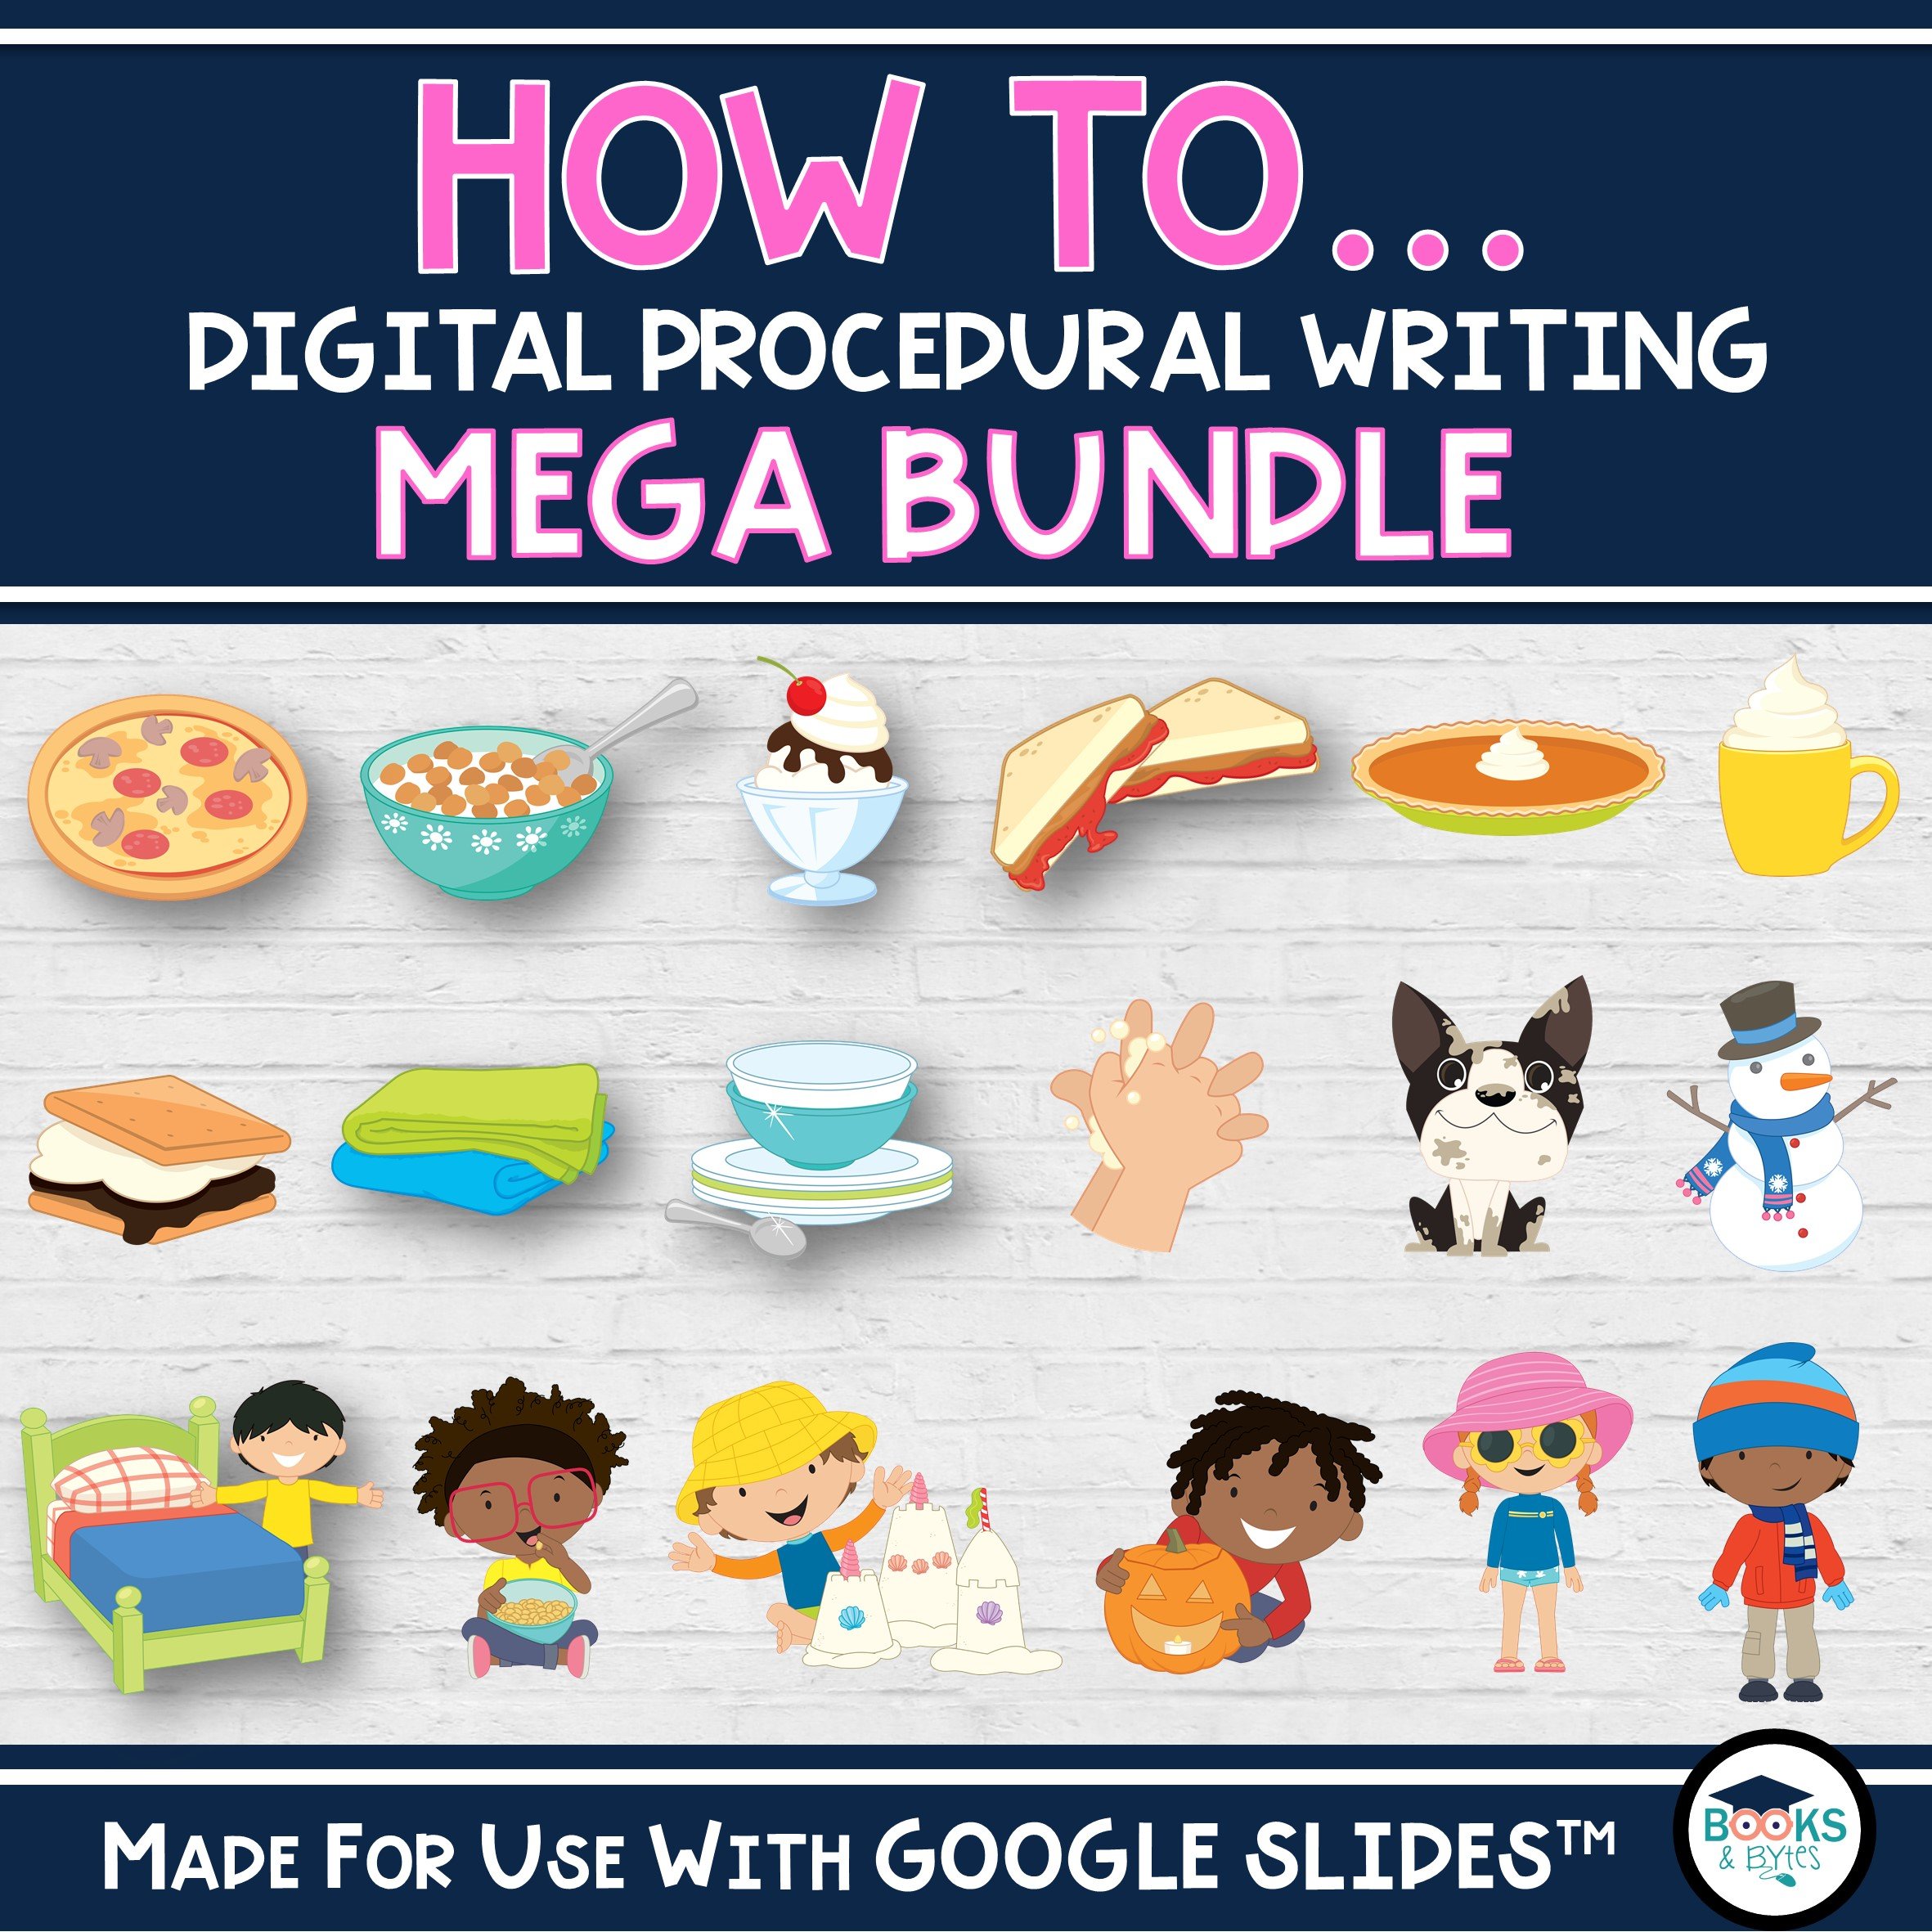 how to mega bundle cover.jpg